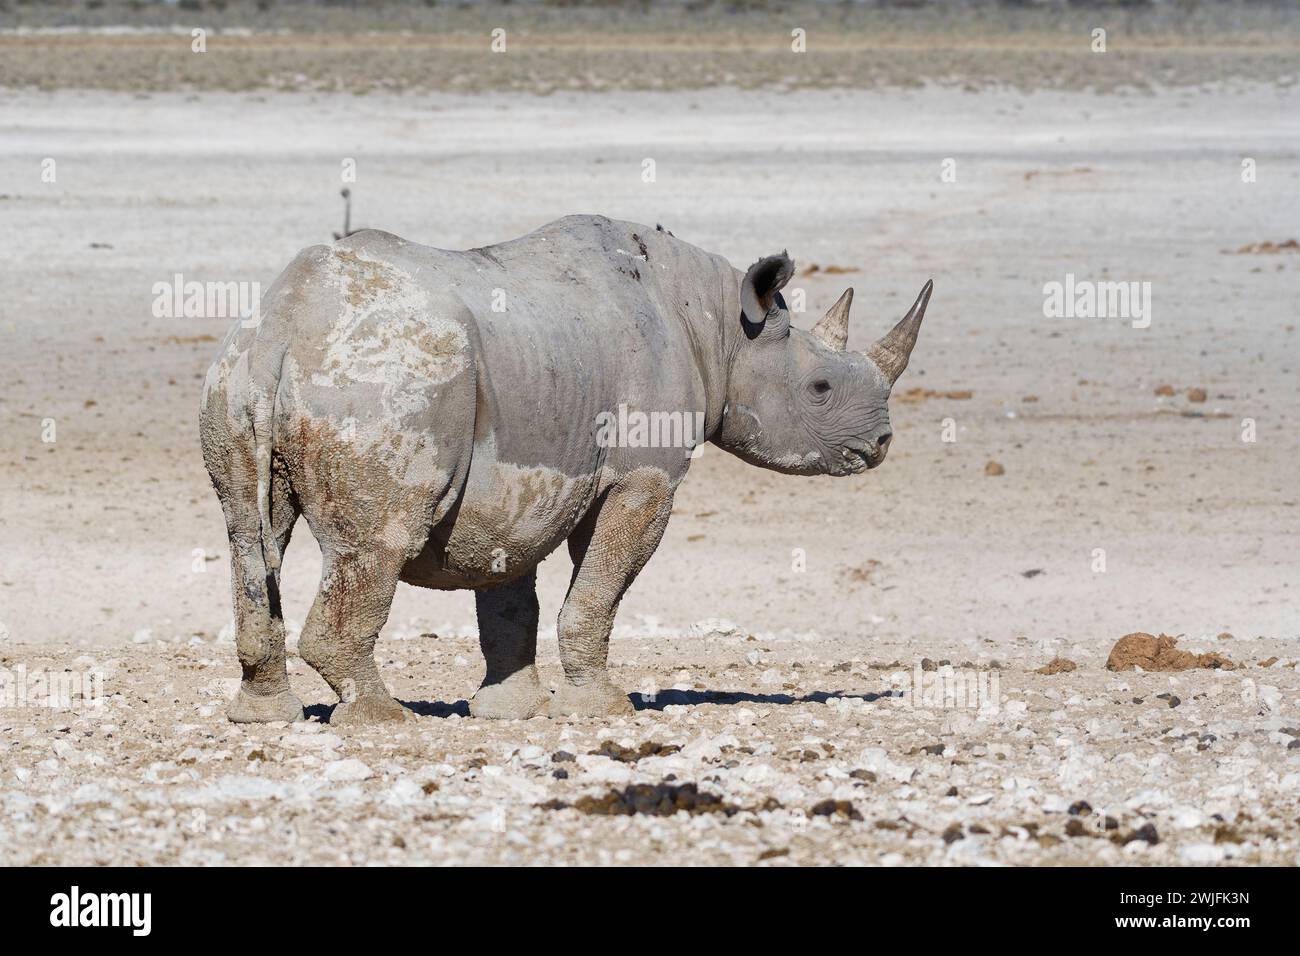 Black rhinoceros (Diceros bicornis), adult female covered in wet mud, standing near the waterhole, alert, Etosha National Park, Namibia, Africa Stock Photo